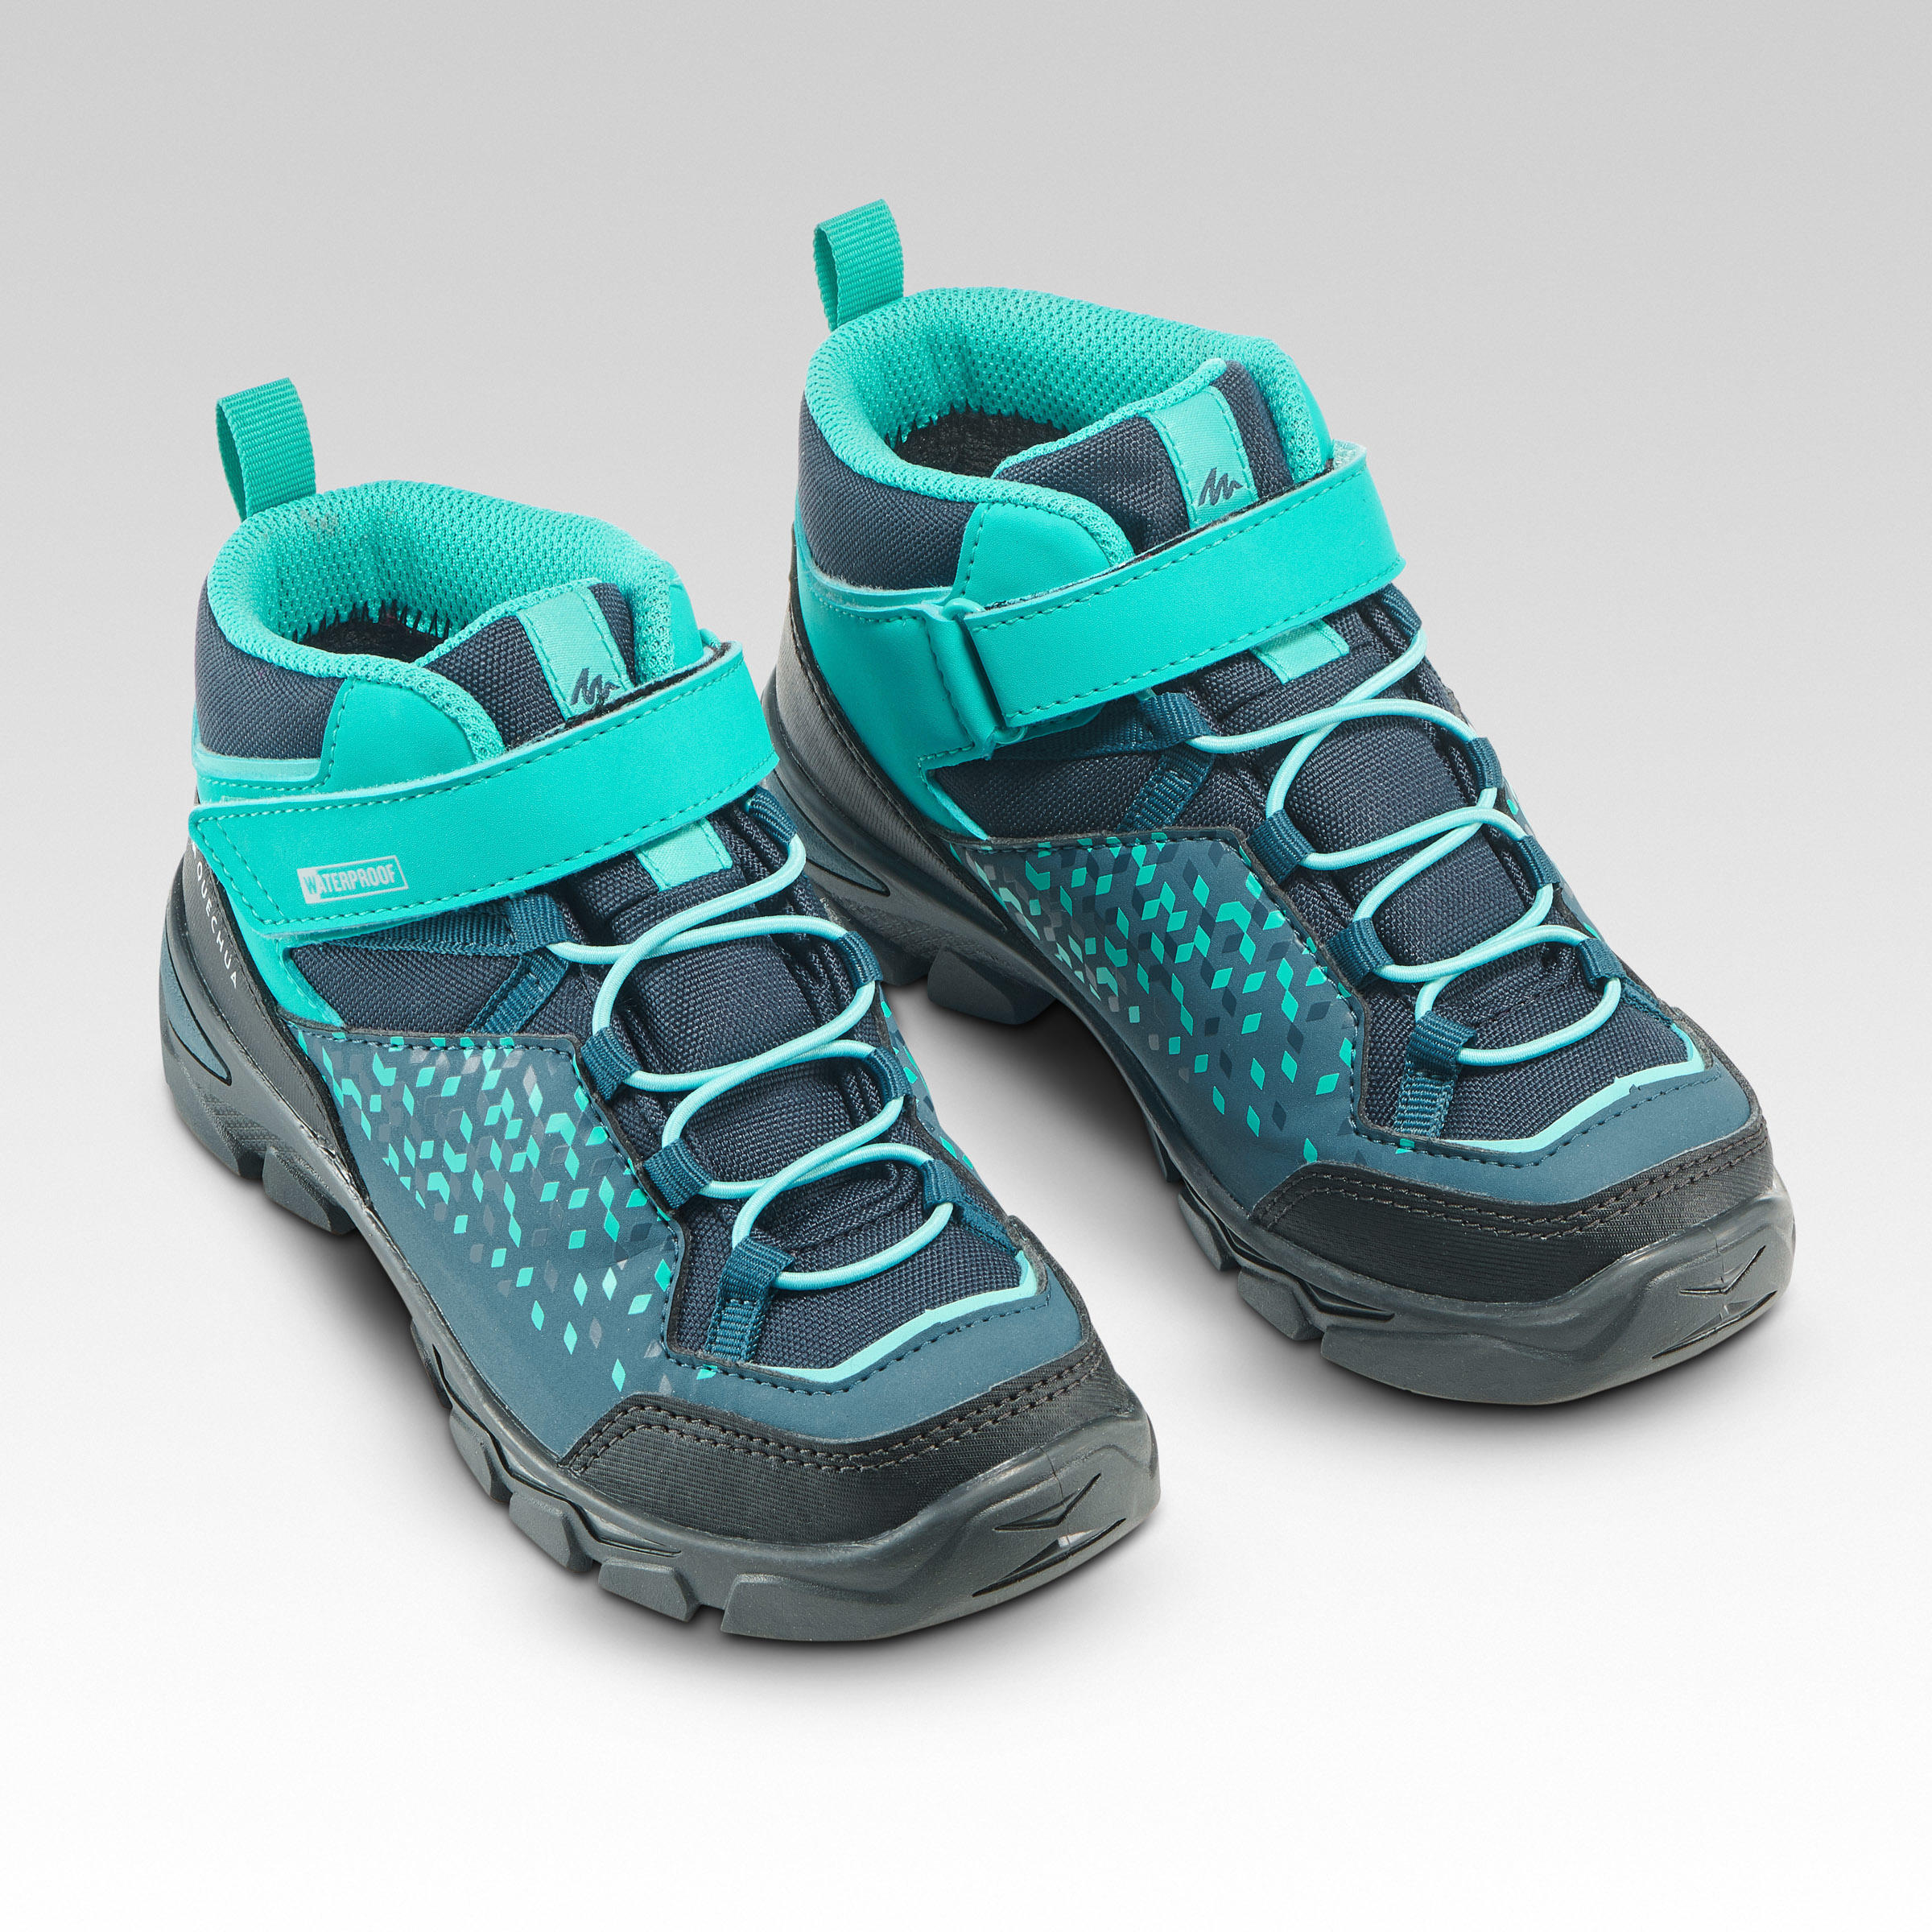 Kid's Hiking Shoes - MH120 Blue - QUECHUA